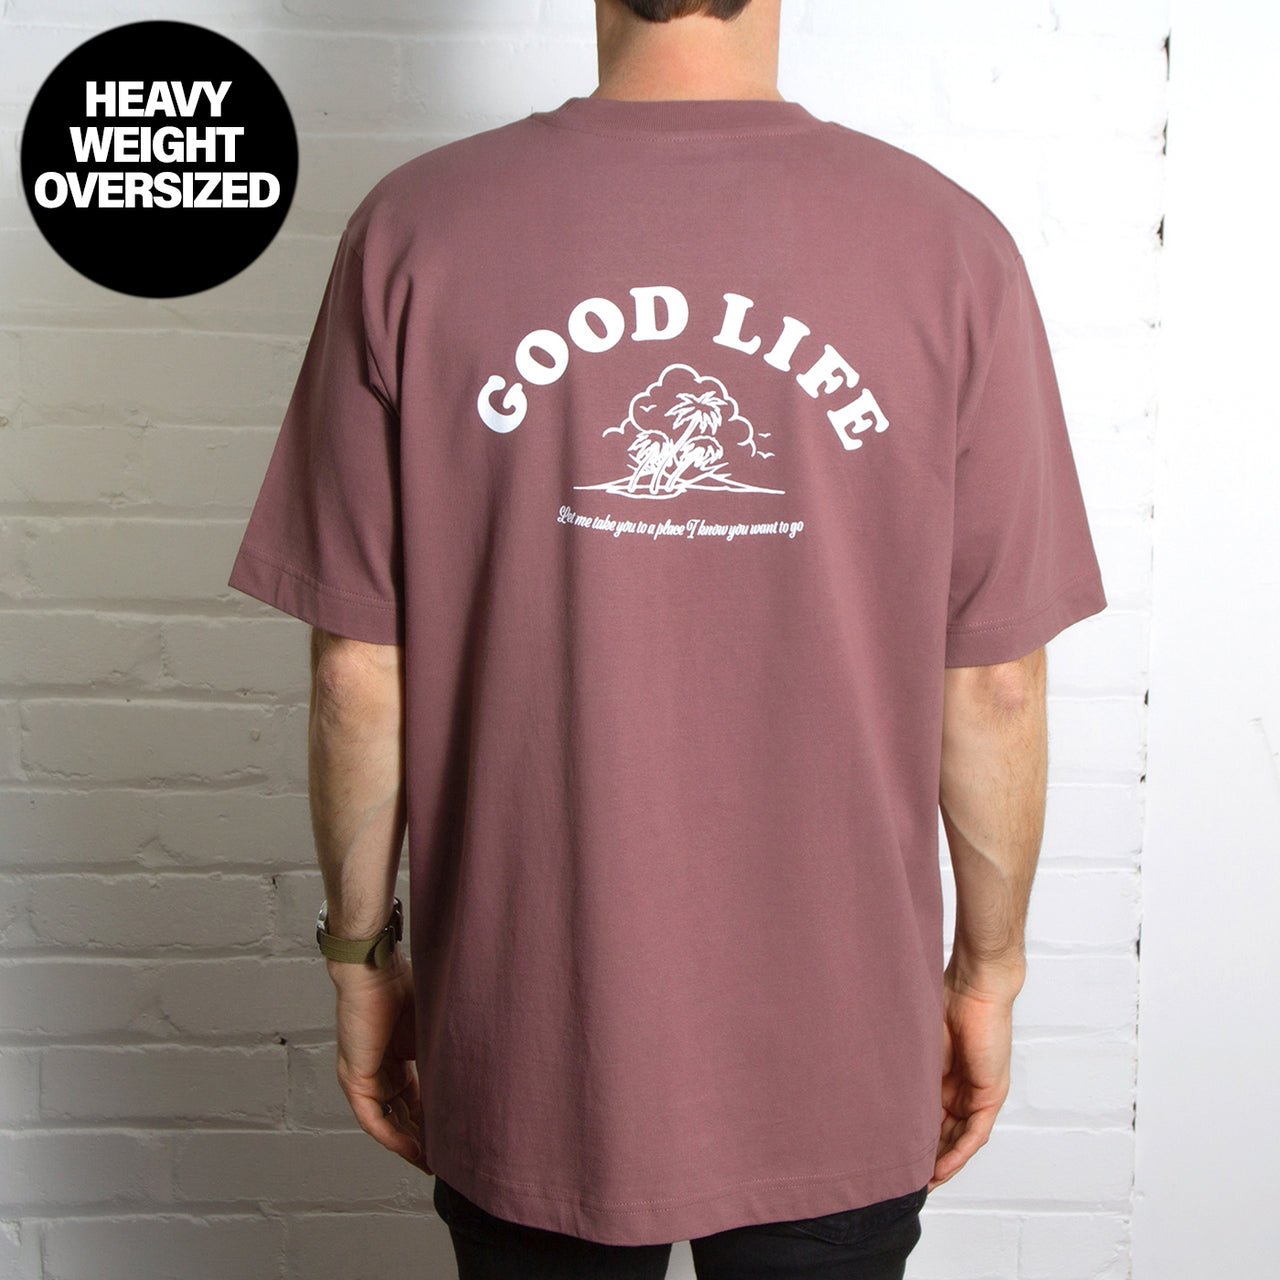 Good Life - Heavyweight Oversized Tshirt - Kaffa